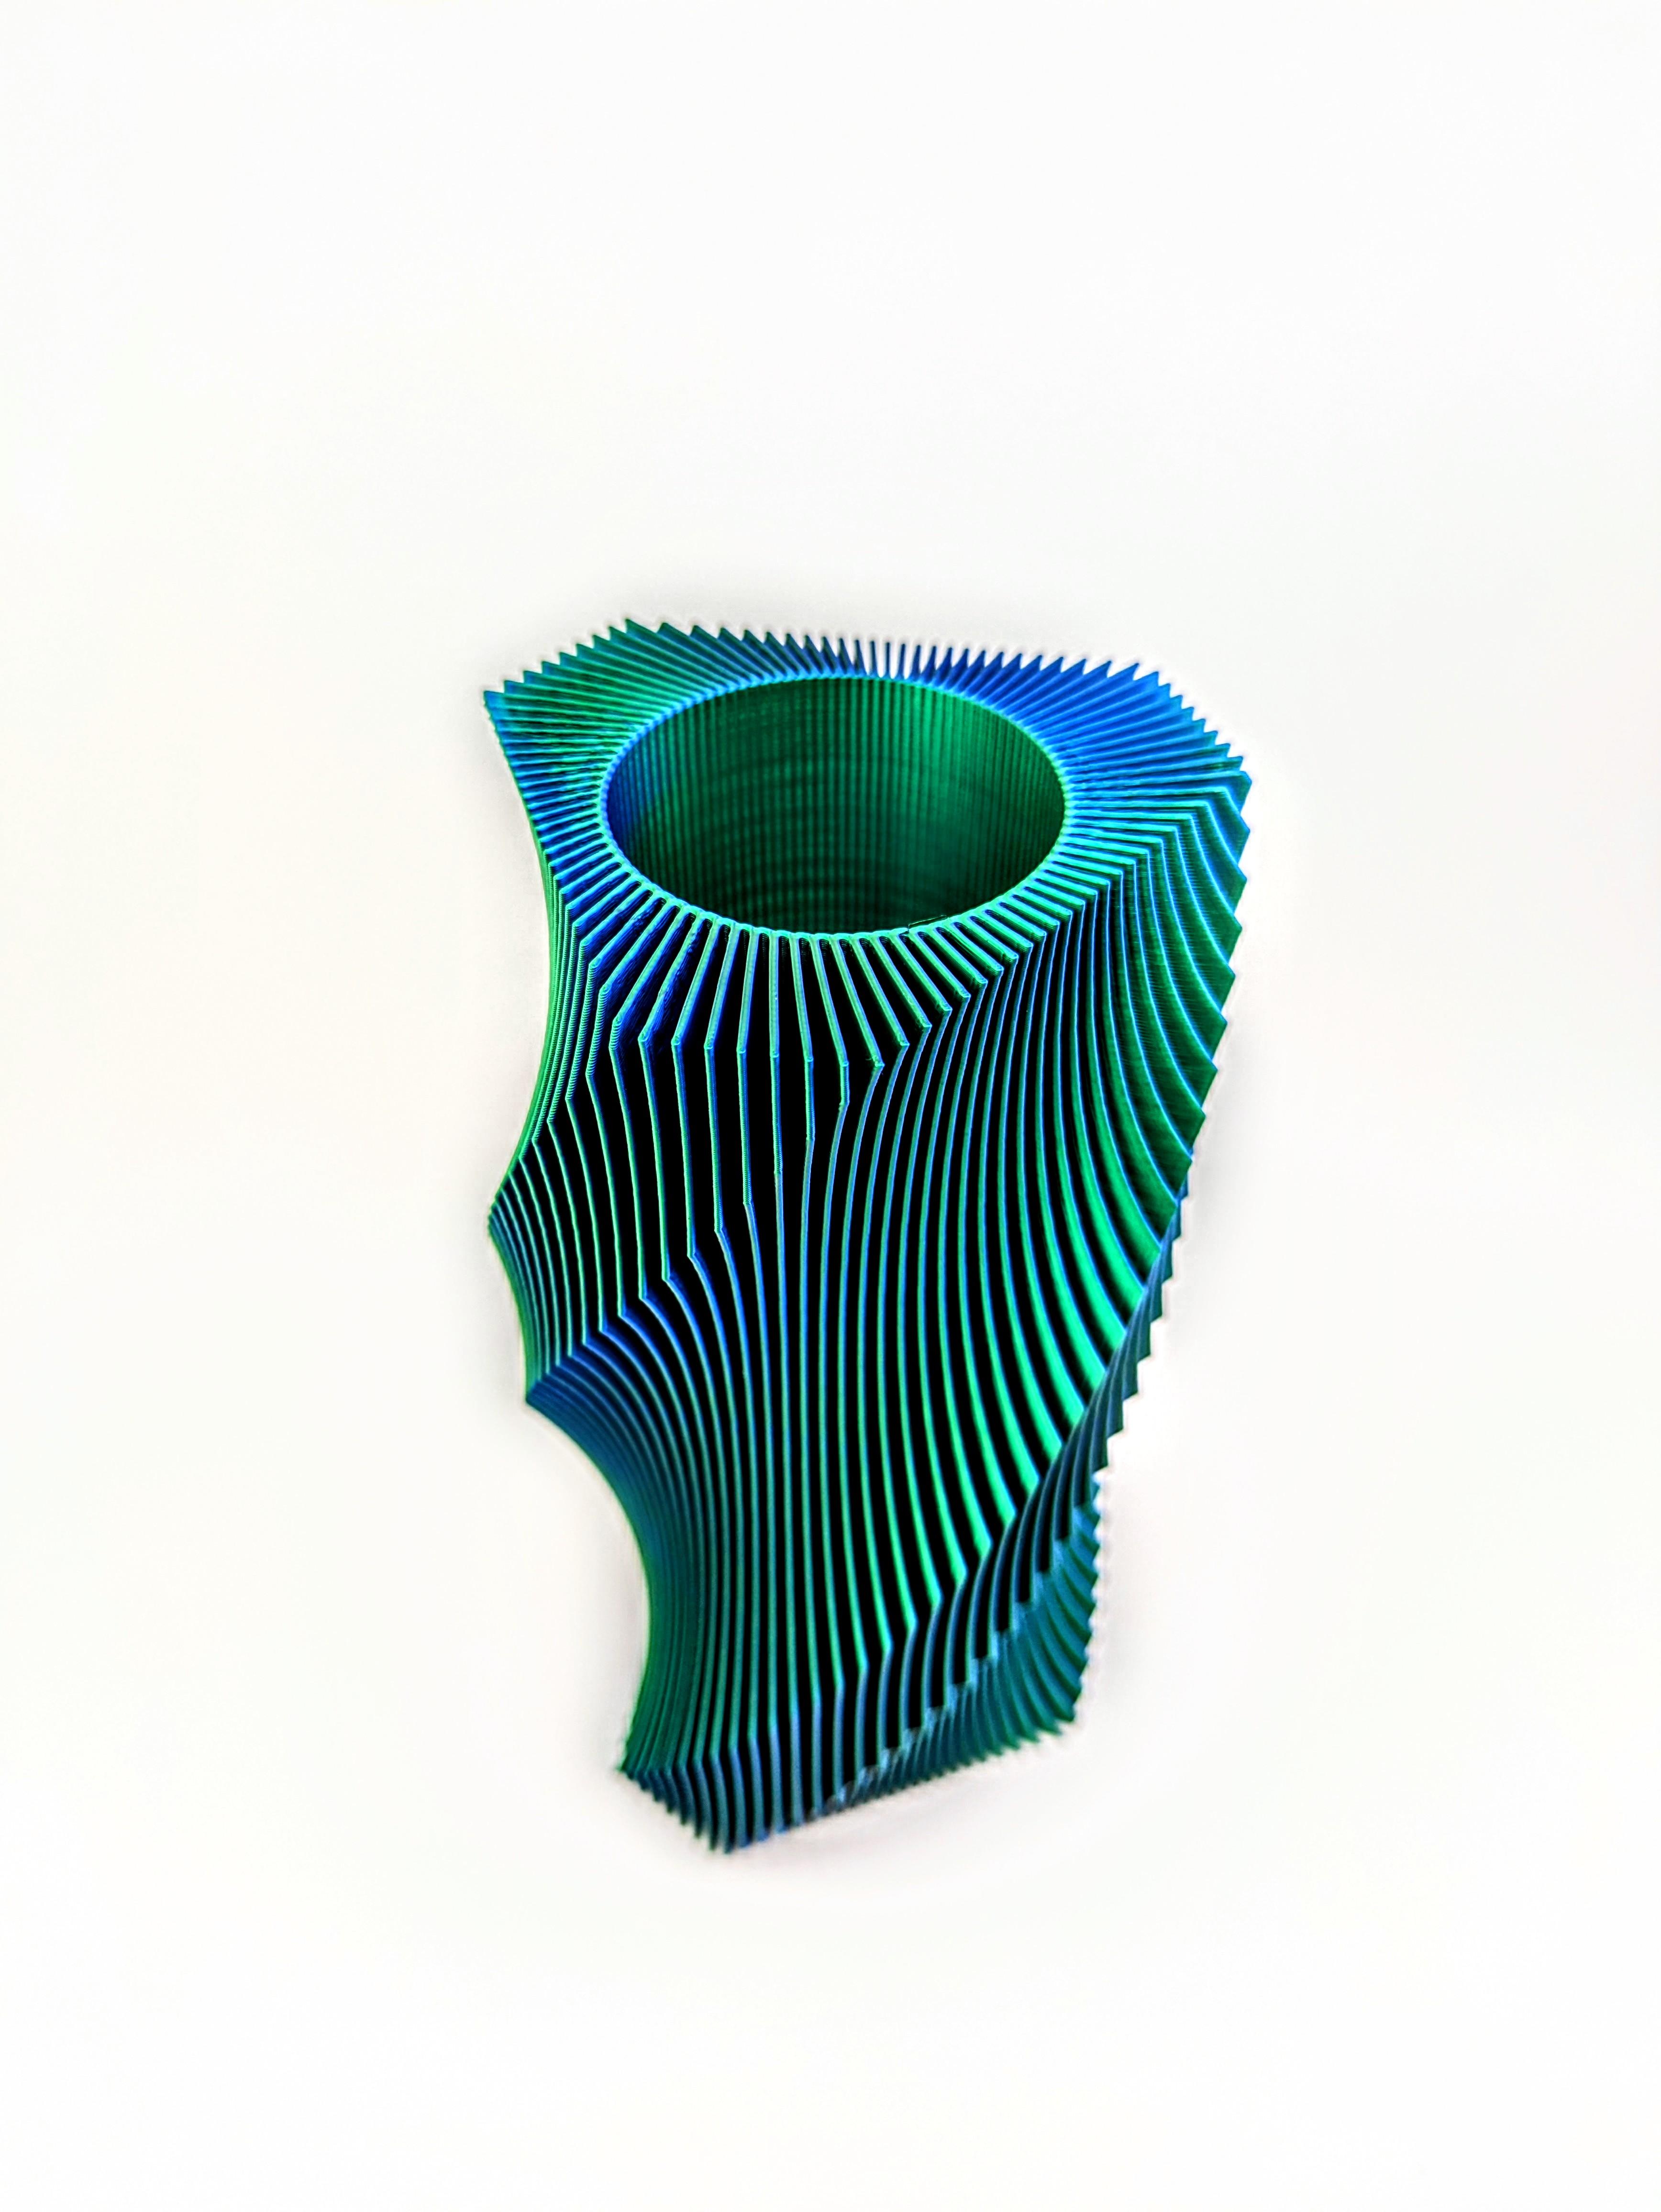 Triangular Fin Vase 3d model